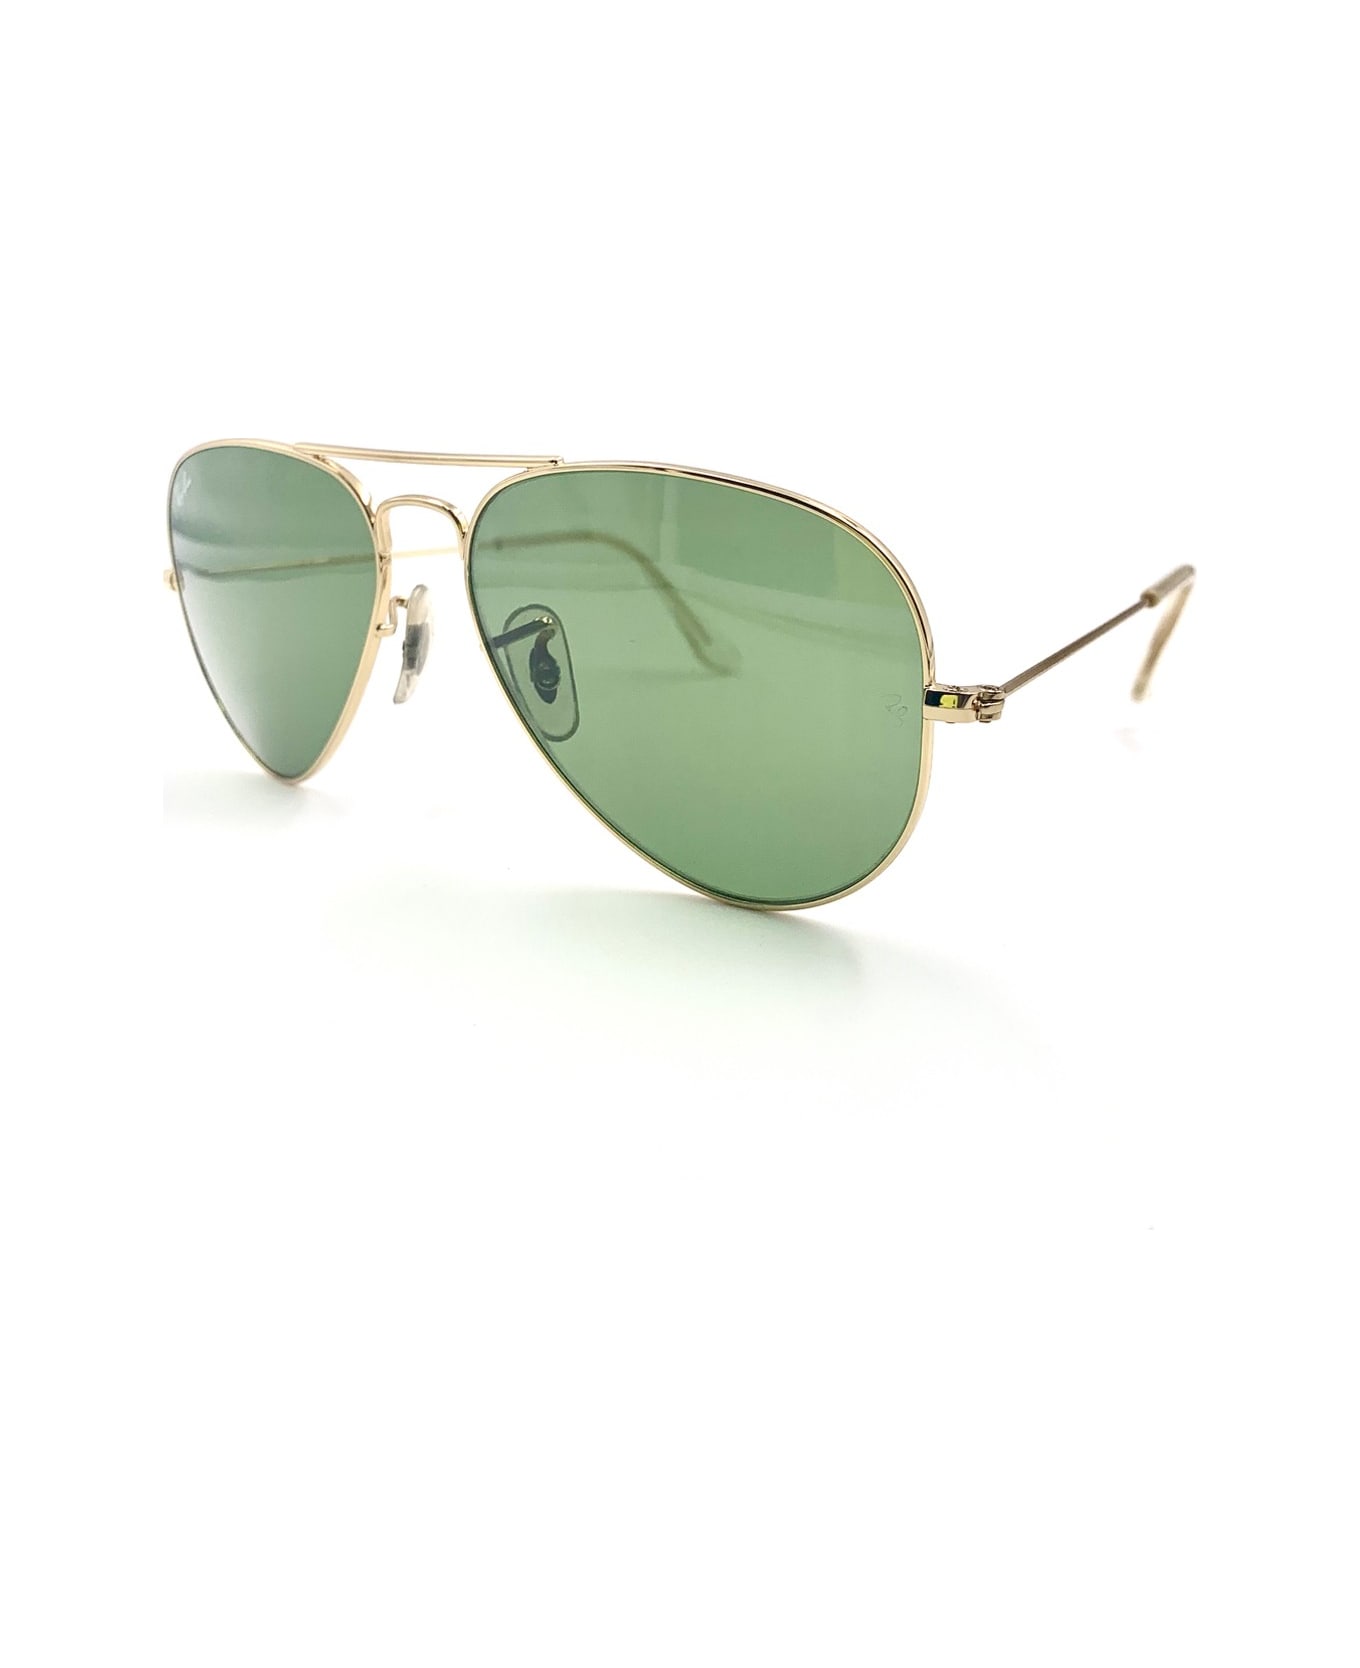 Ray-Ban Aviator Rb 3025 Sunglasses - Oro サングラス